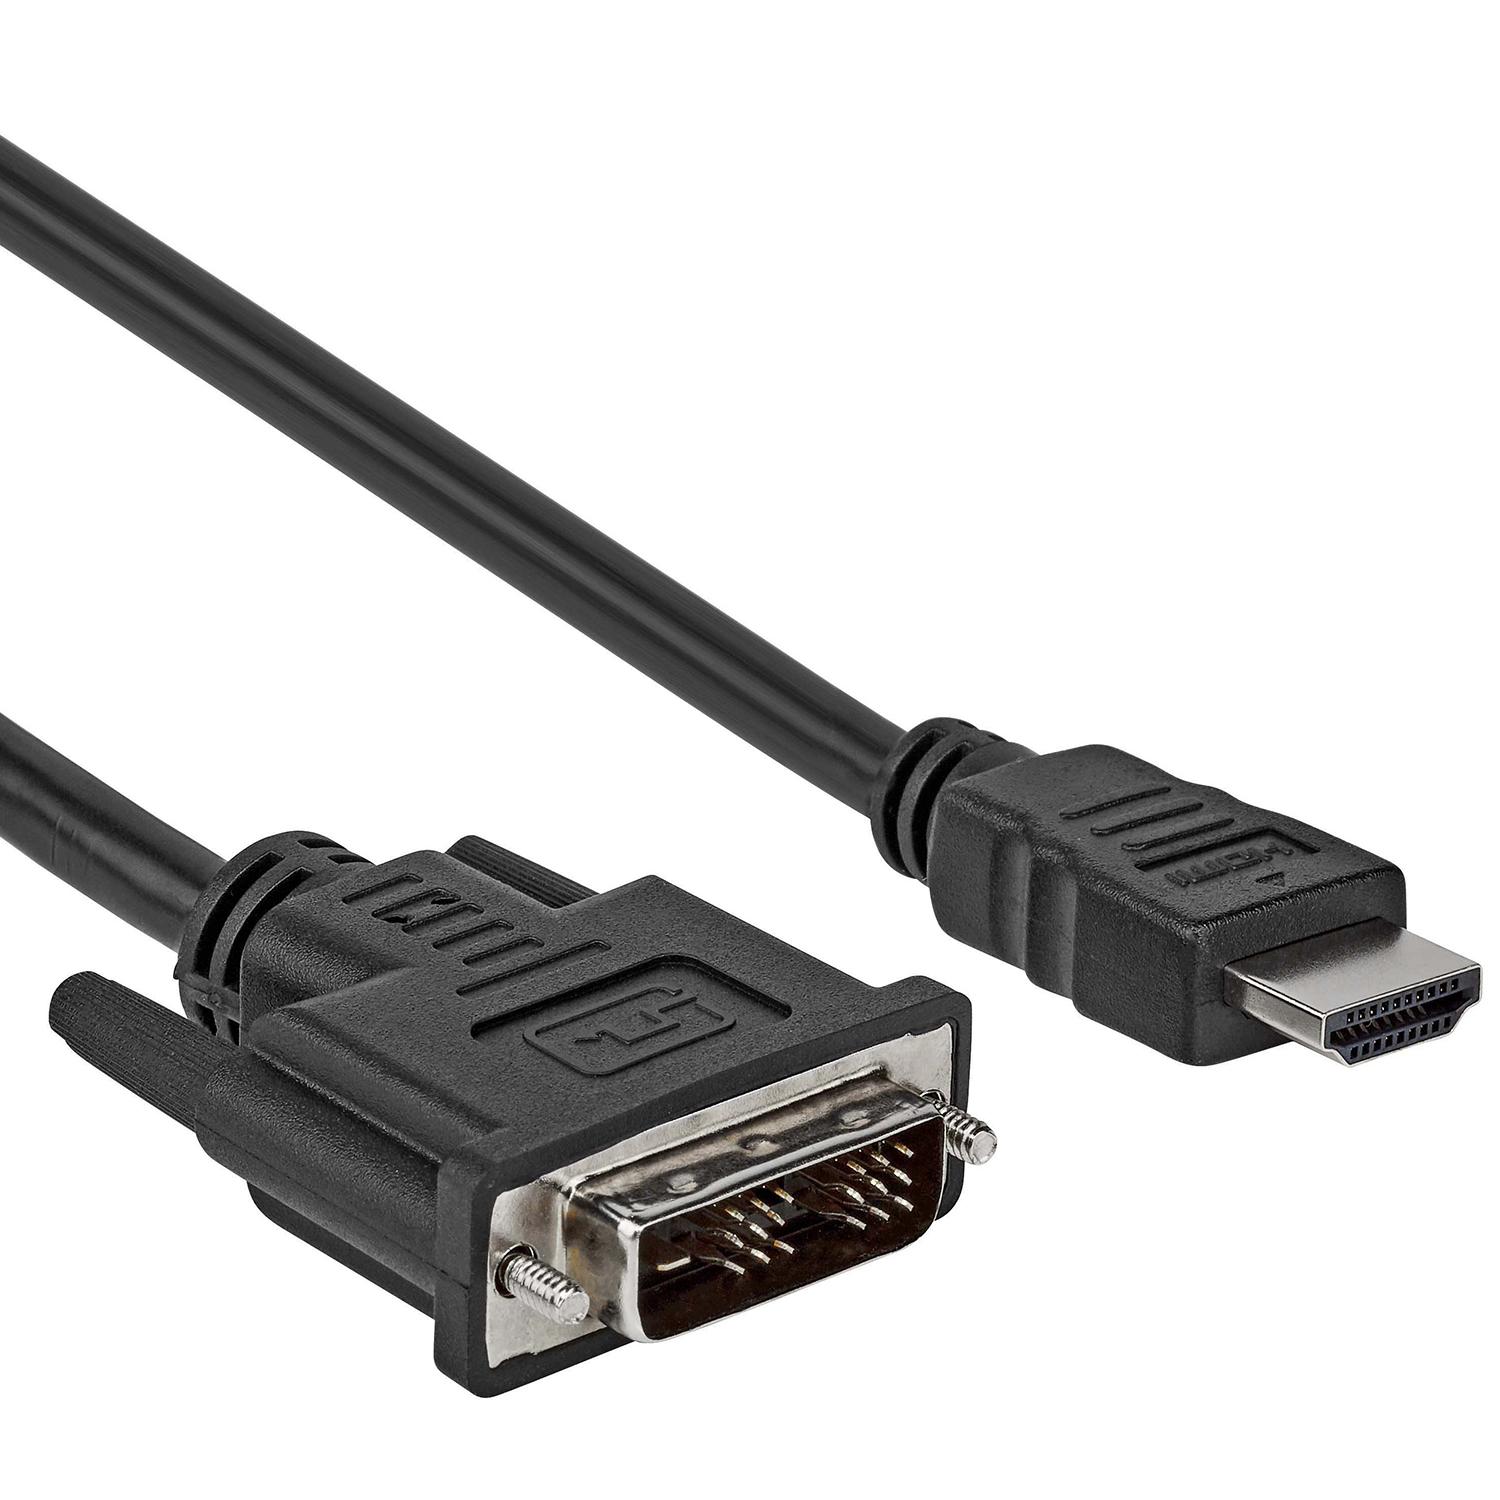 HDMI - DVI kabel - Allteq